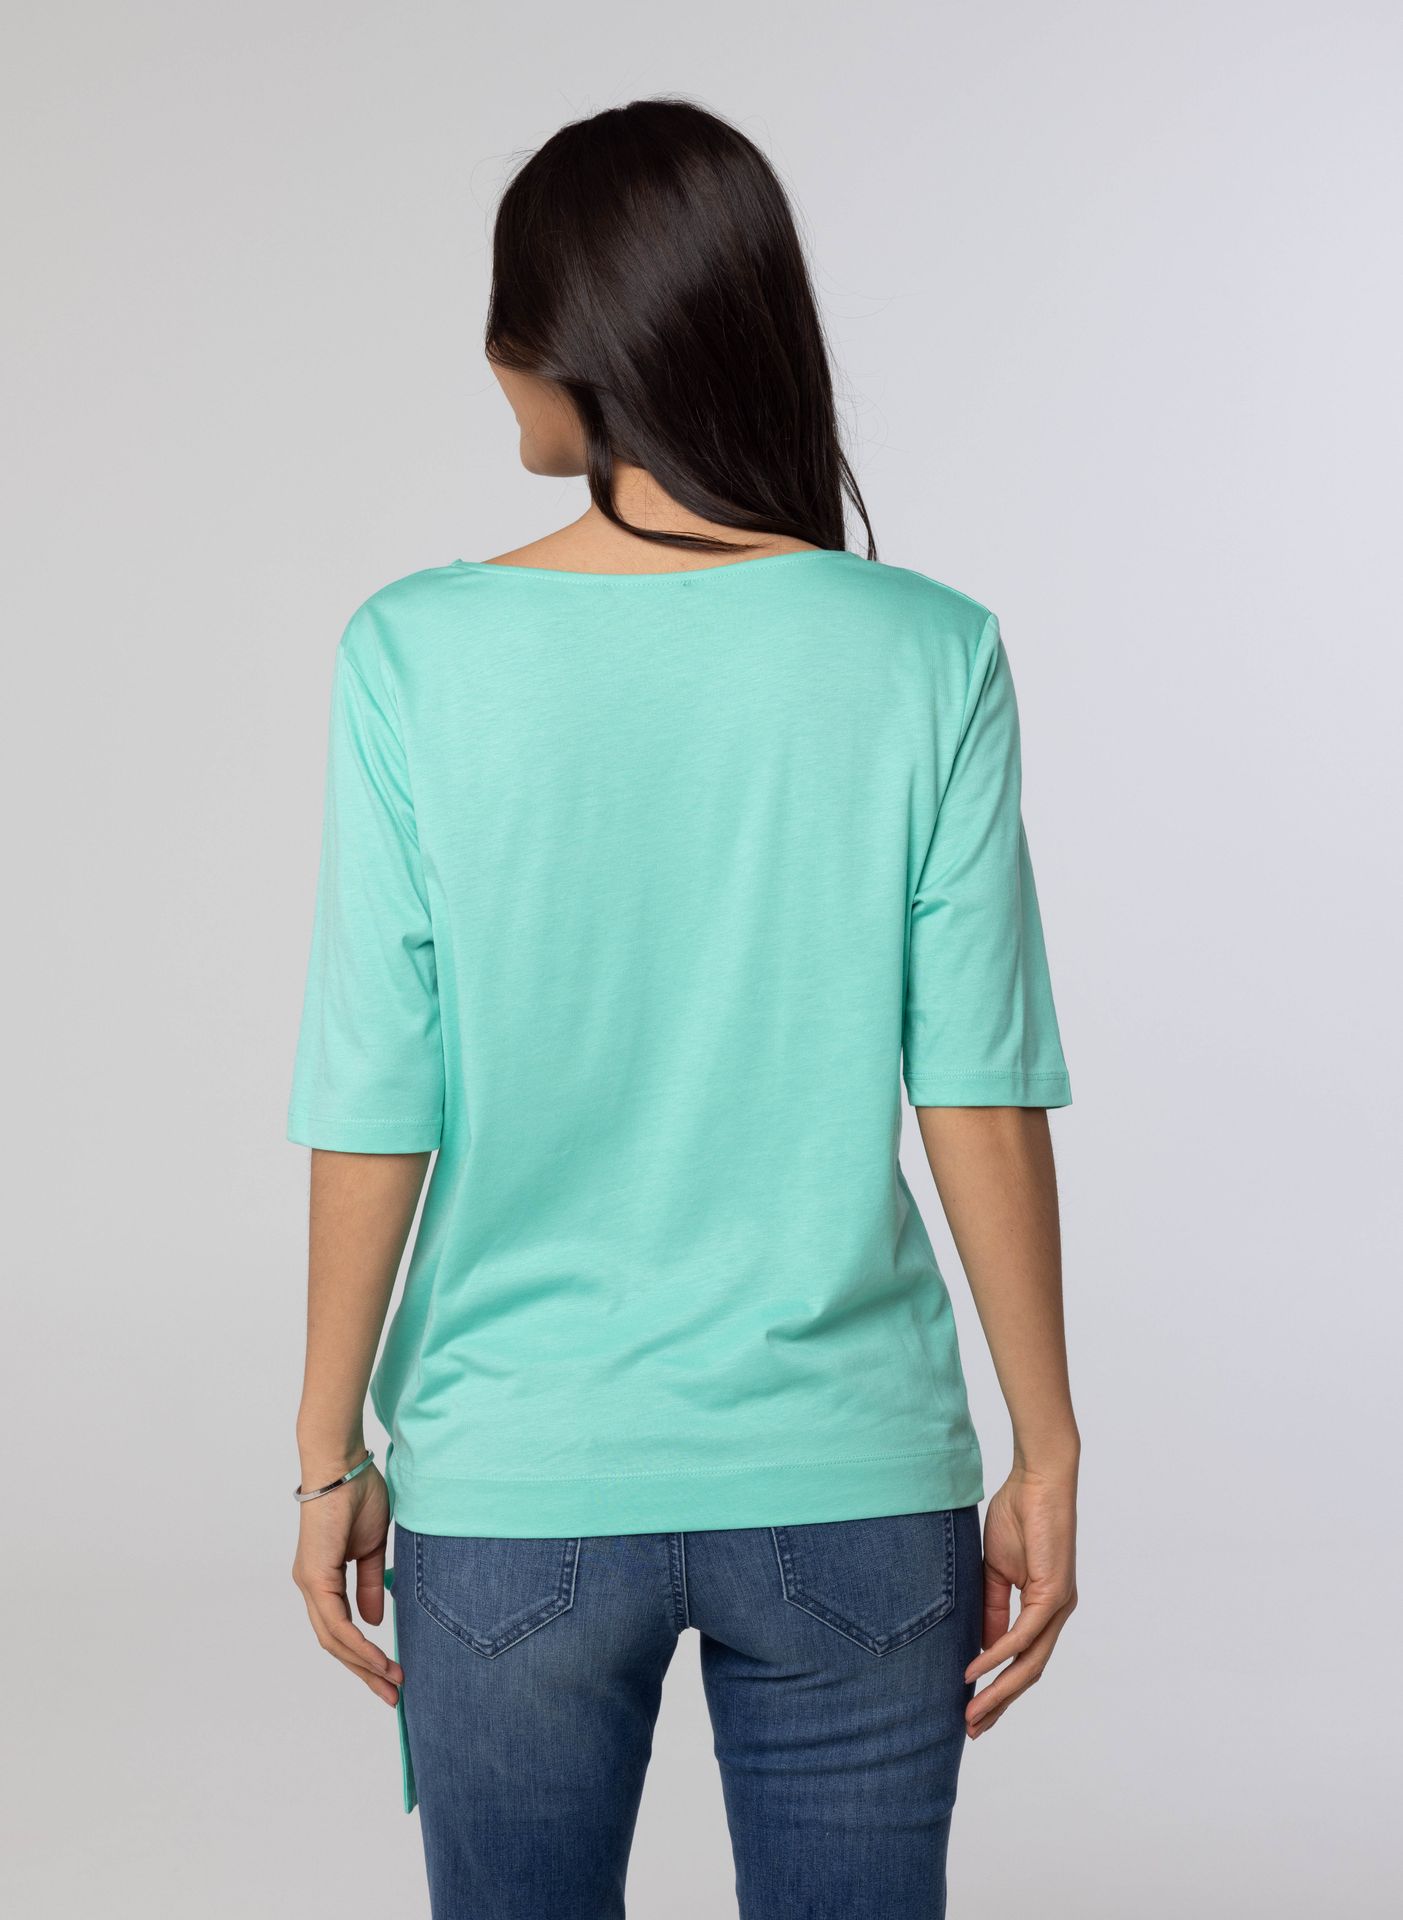 Norah Groen shirt met strik sea green 209993-575